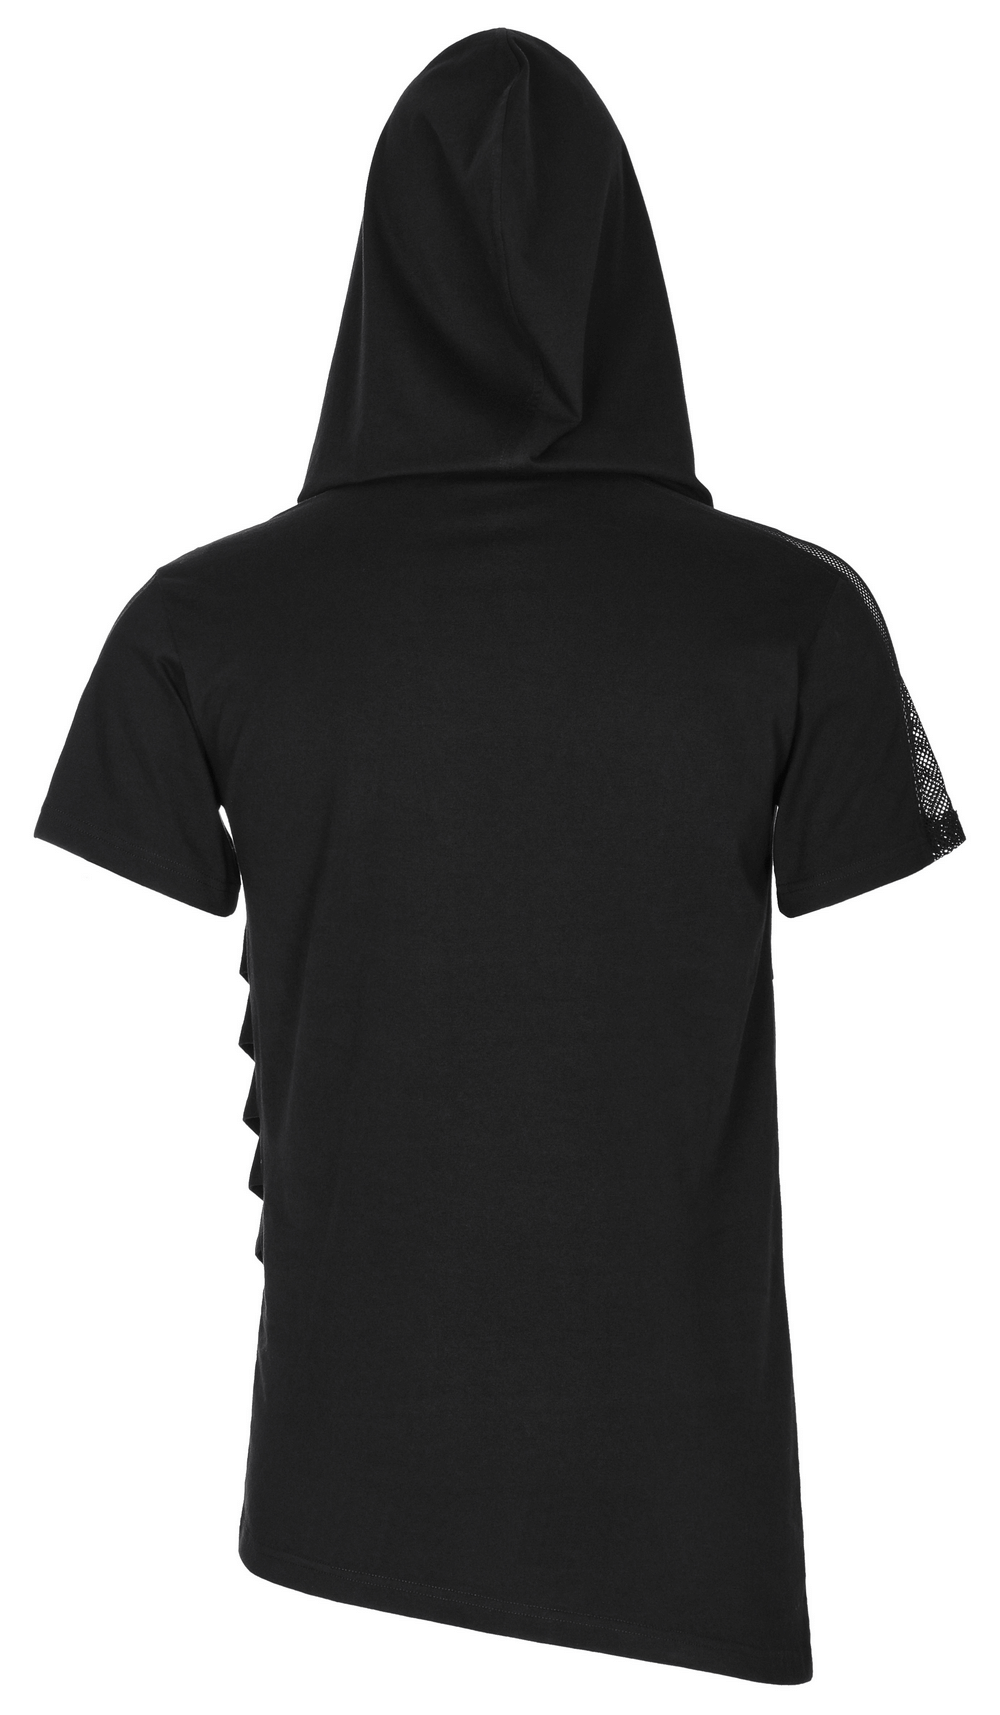 Stylish Black Mesh Spliced Punk Hooded T-Shirt